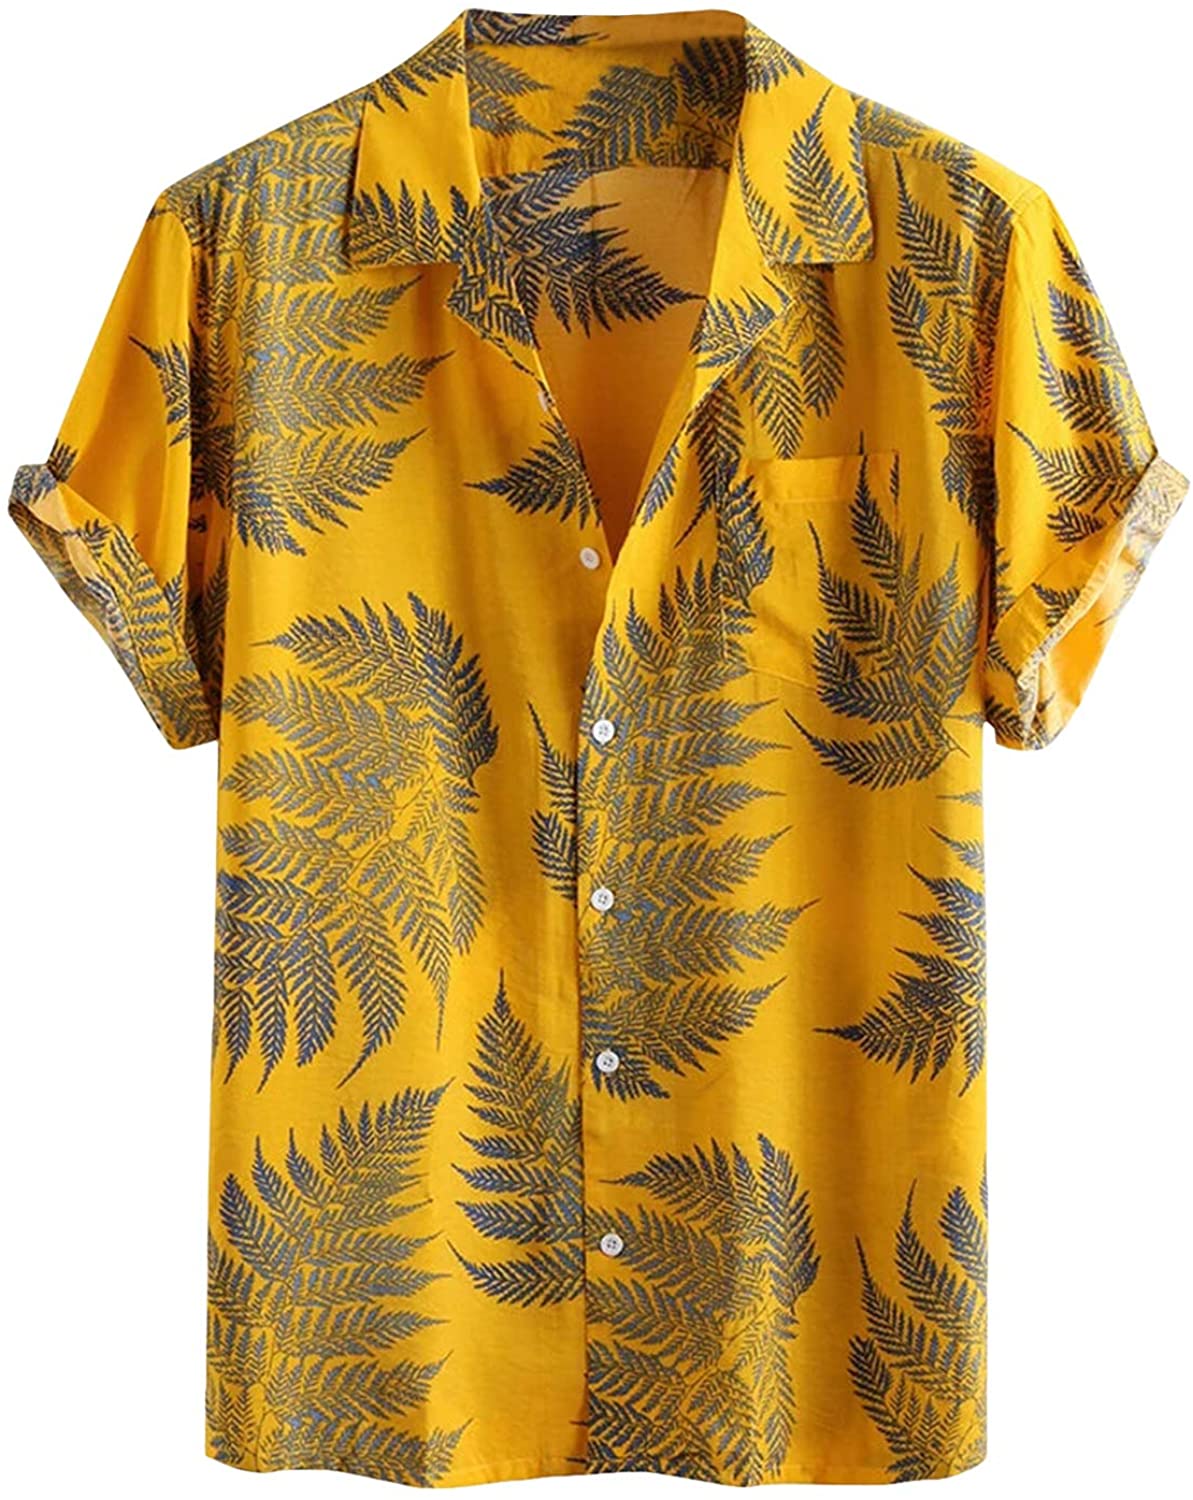 Toufguy Men's Hawaiian Shirt Printed Linen Cotton Short Sleeve Button Down  Regul | eBay